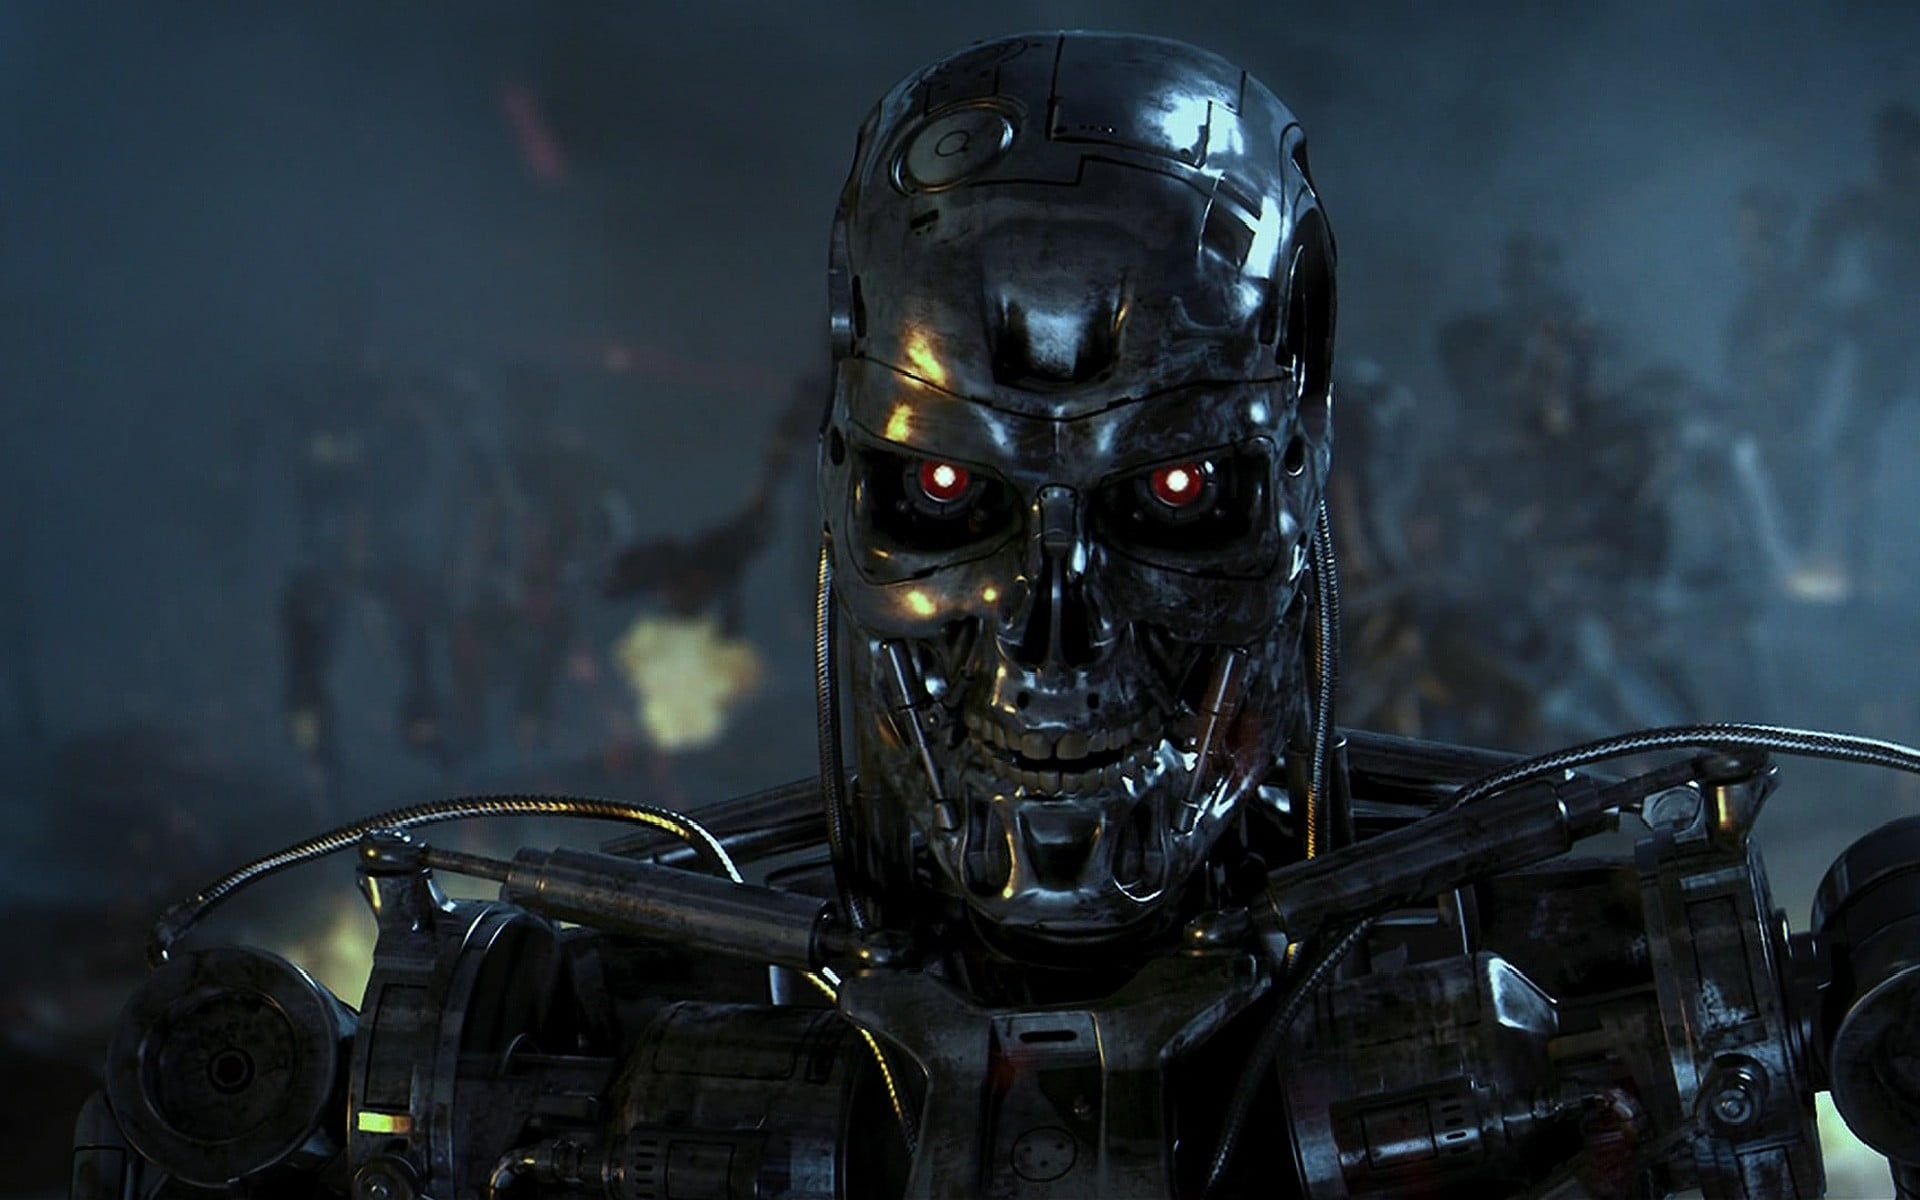 Terminator Robot #T 800 #Terminator Science Fiction #movies #endoskeleton P #wallpaper #hdwallpaper #deskto. Terminator, Terminator Movies, Digital Wallpaper